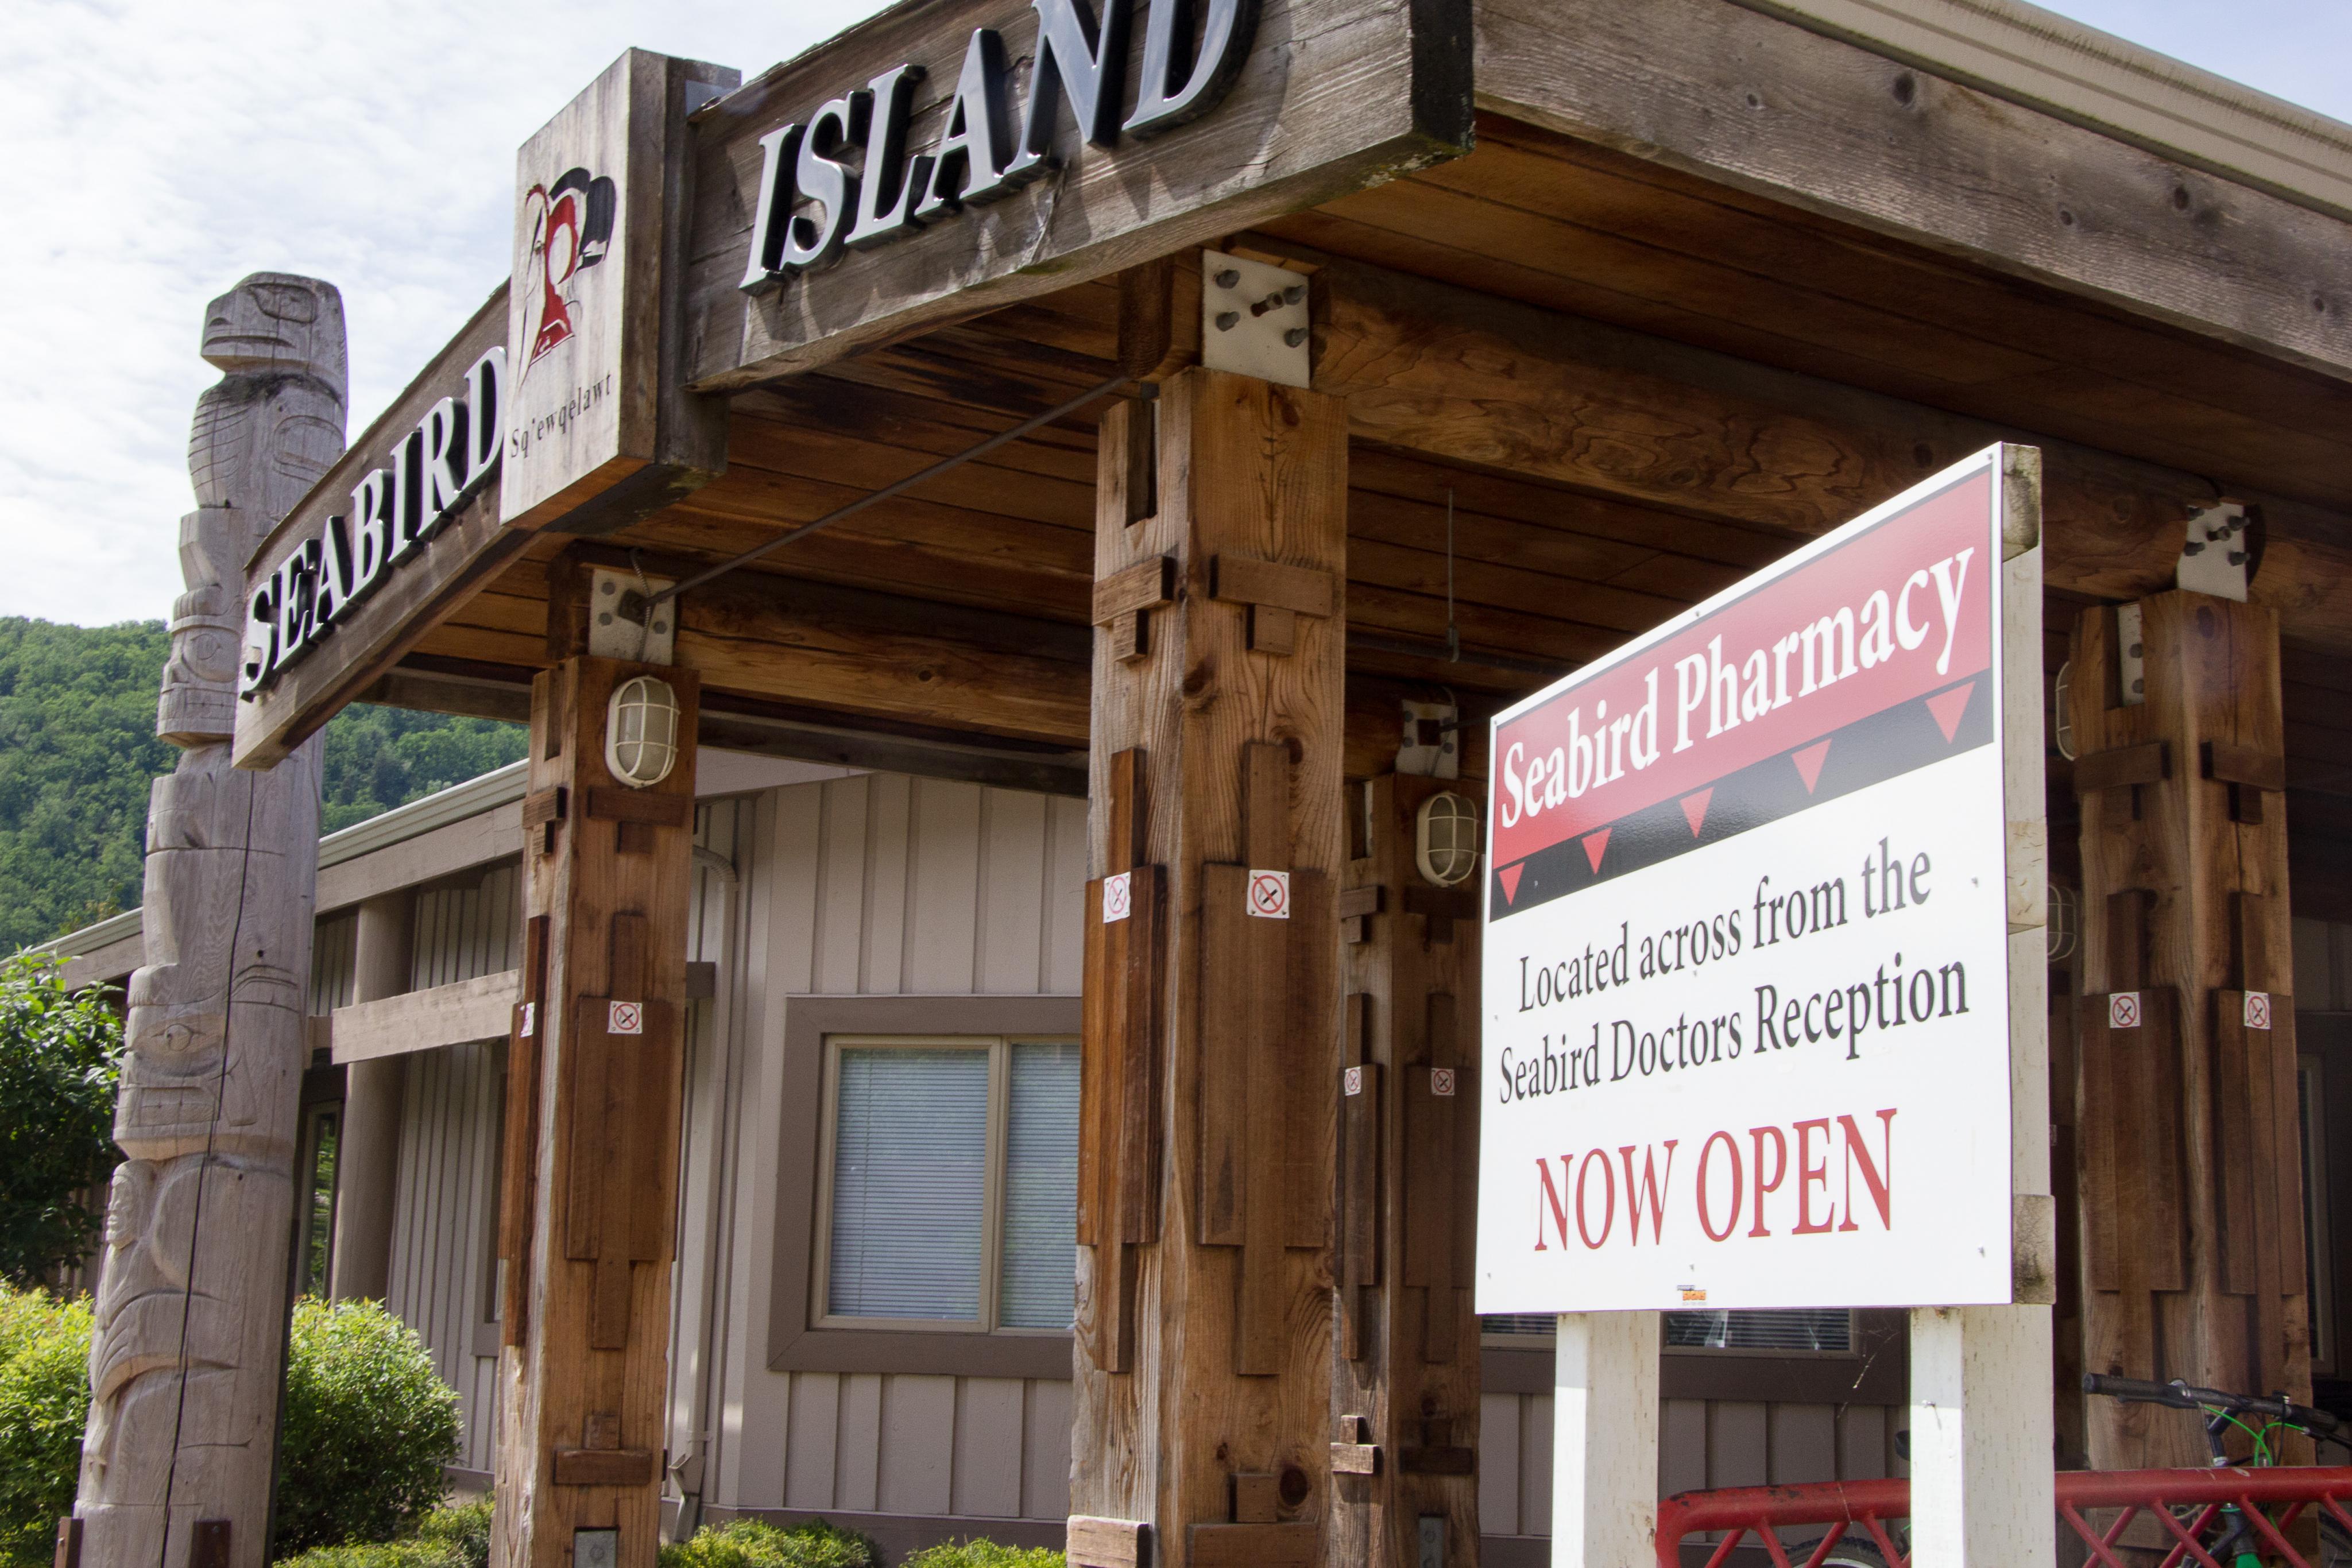 Seabird Island Pharmacy